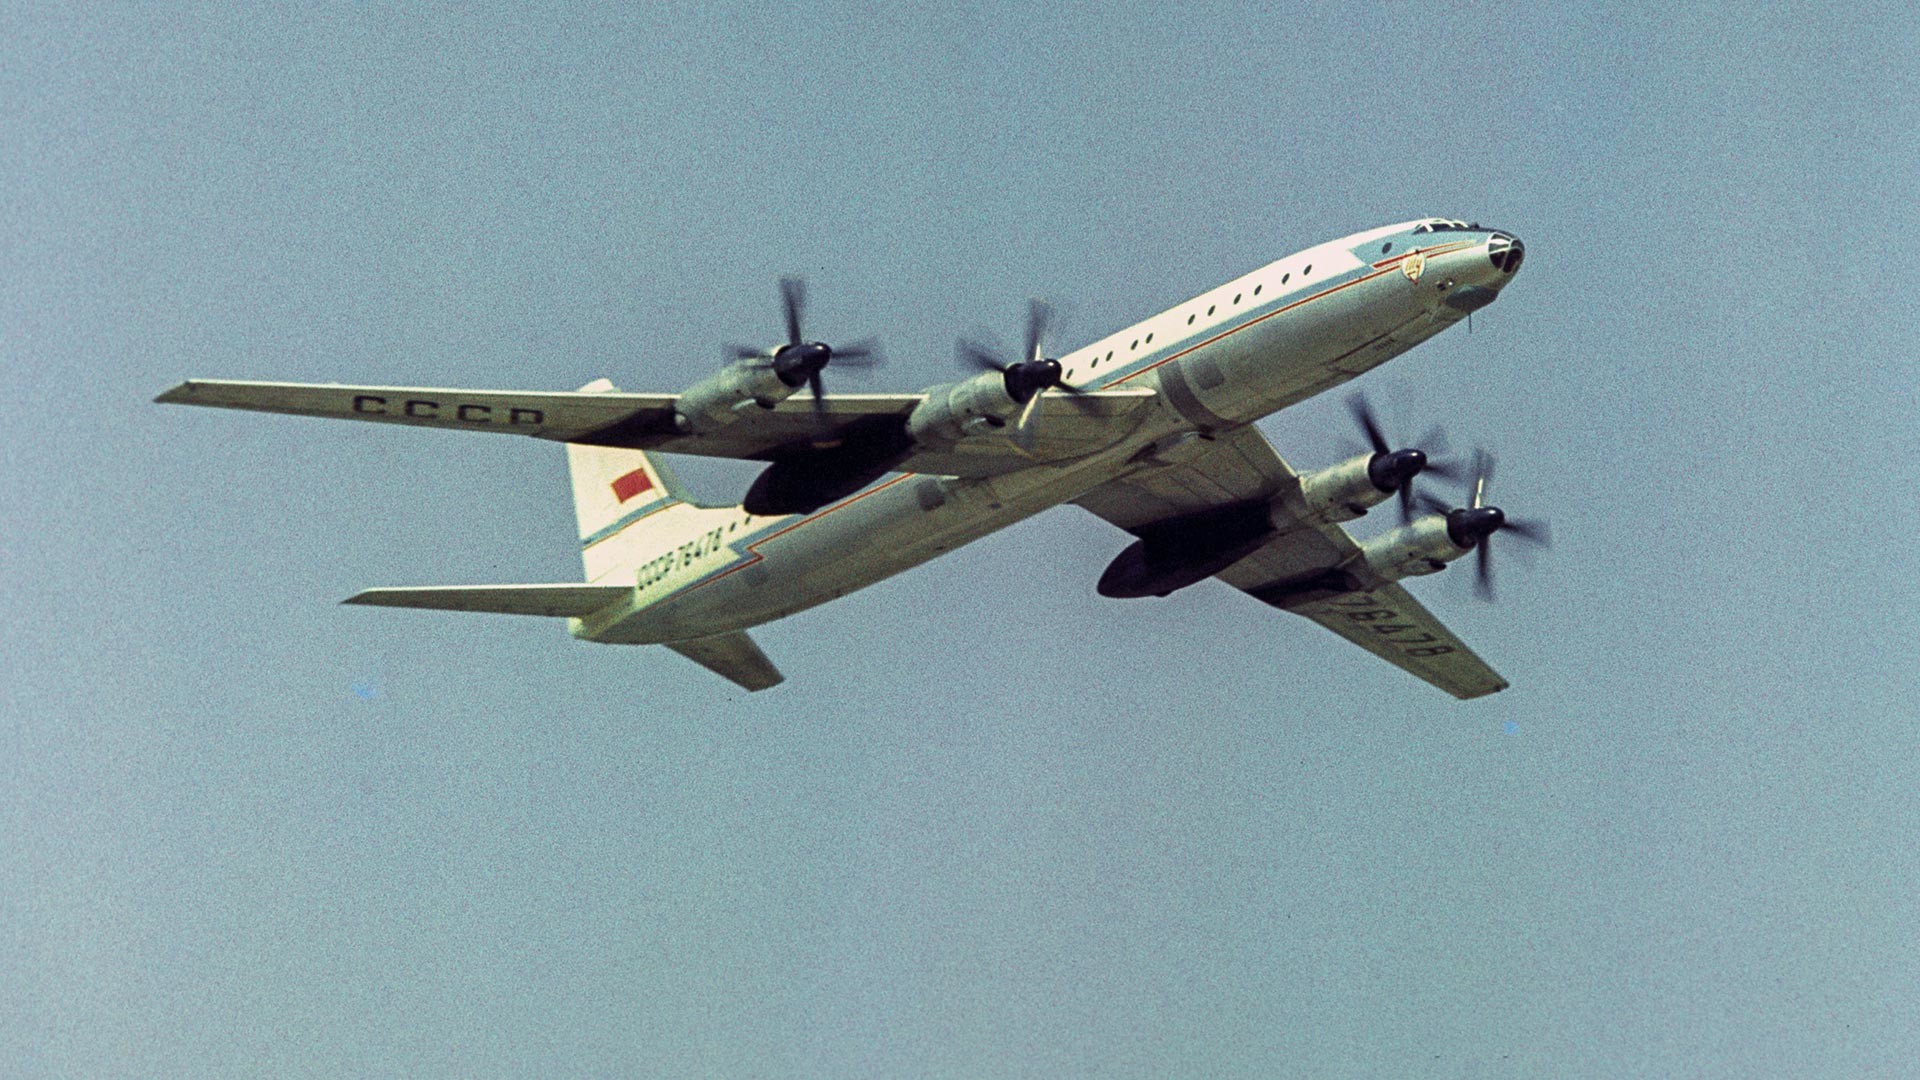 Ваздухопловна прослава на аеродрому Домодедово, поводом 50. годишњице Великог октобра. Путнички авион Ту-114.